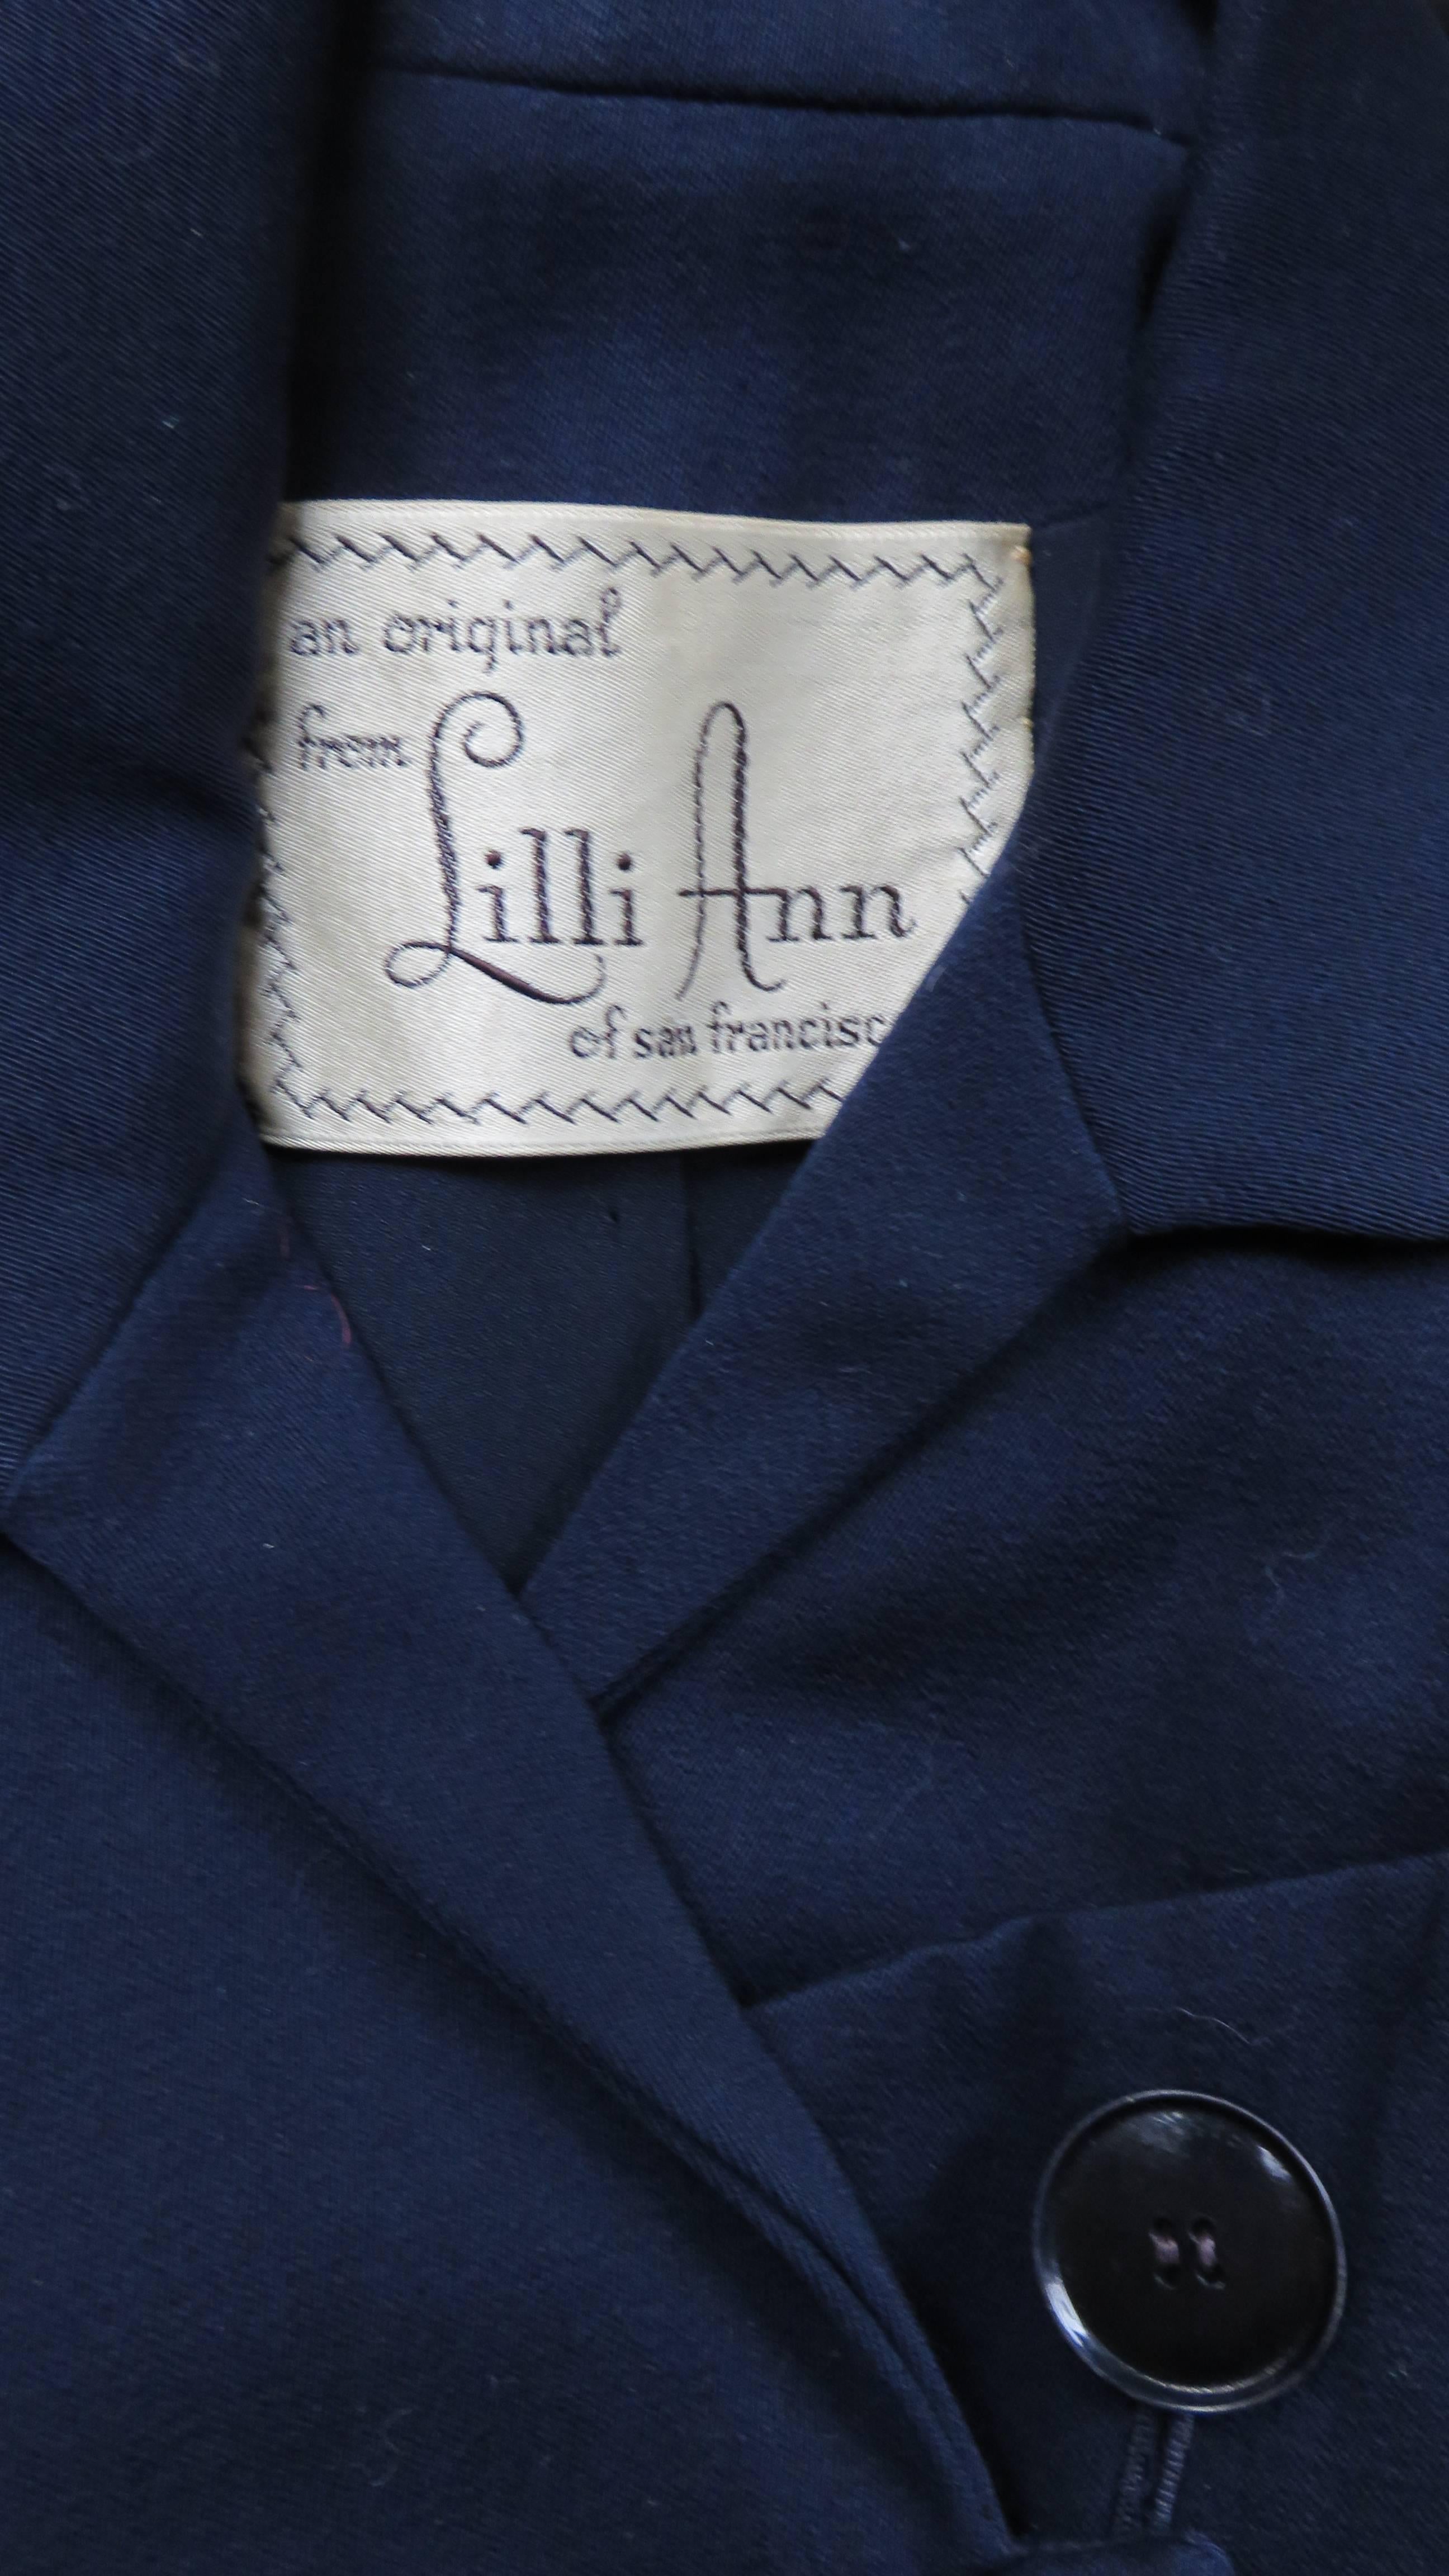  1940s Lilli Ann Button Detail Jacket 4